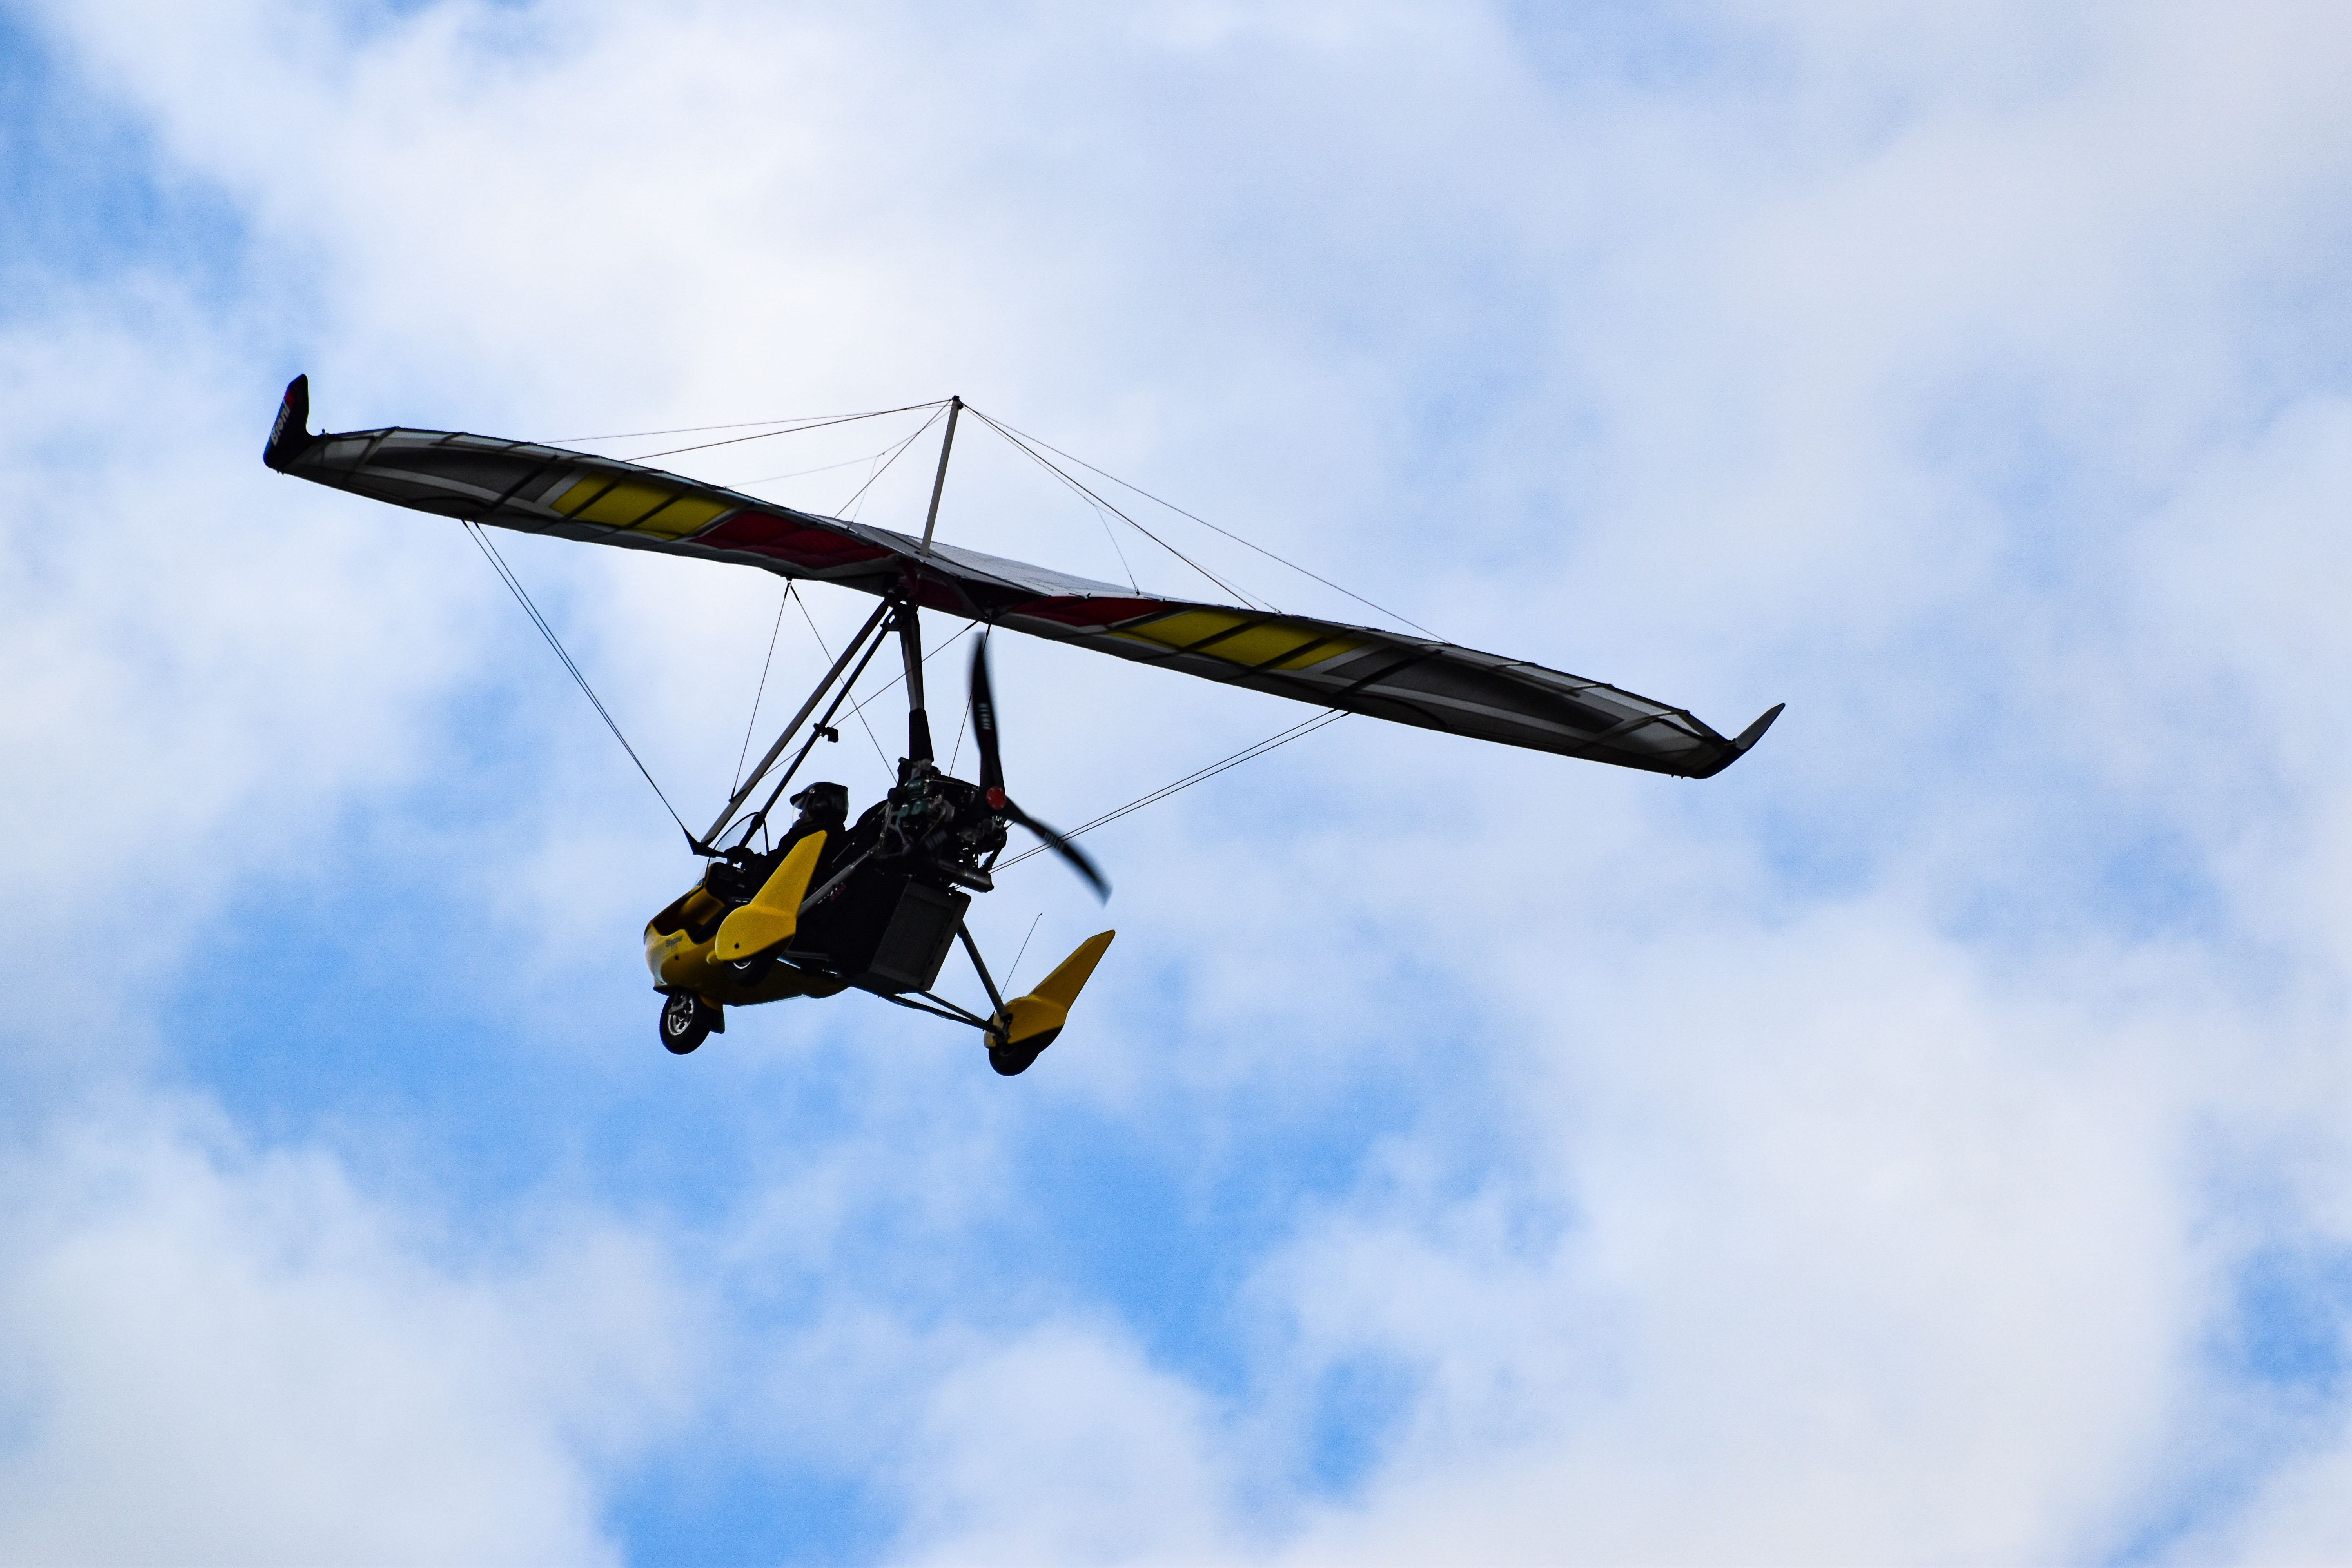 fly/en-vol-bionix2-skypper-evo-en-vol-in-fly-ulm-pendulaire-ultralight-trike-wings-11.jpg